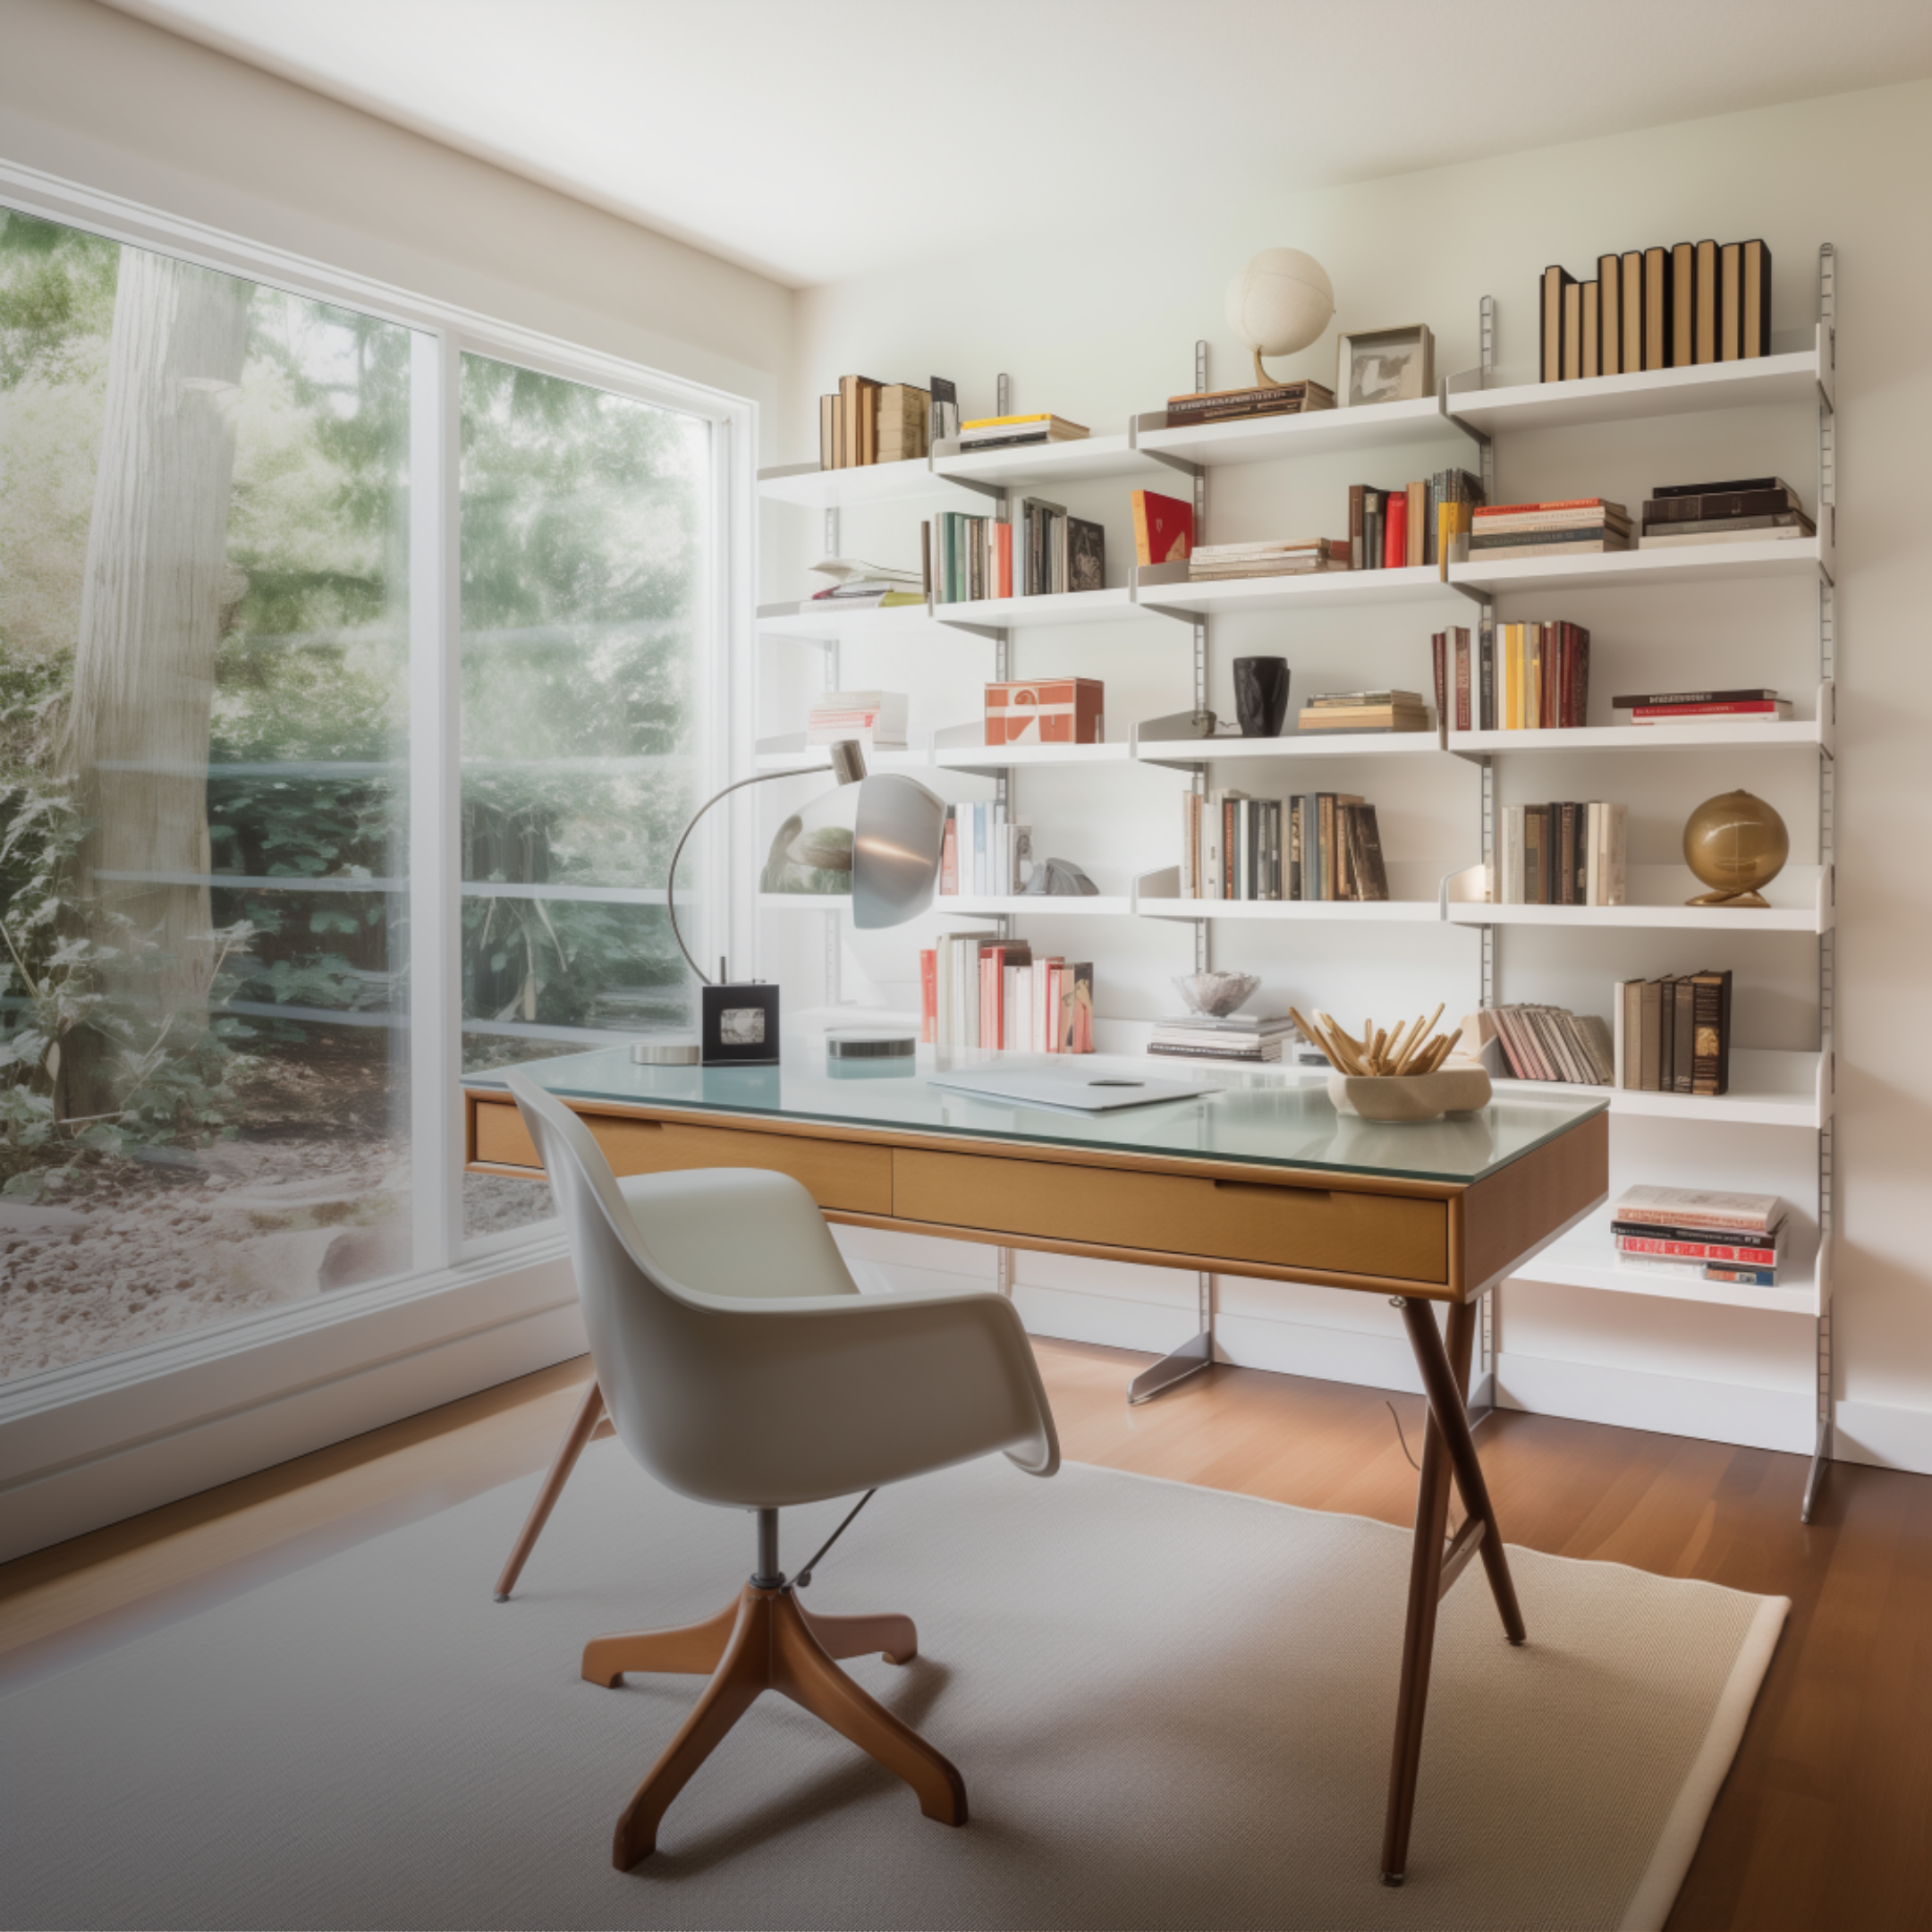 Modern office furniture displayed in Tacoma, Washington showroom with ergonomic chairs, desks, and stylish decor.